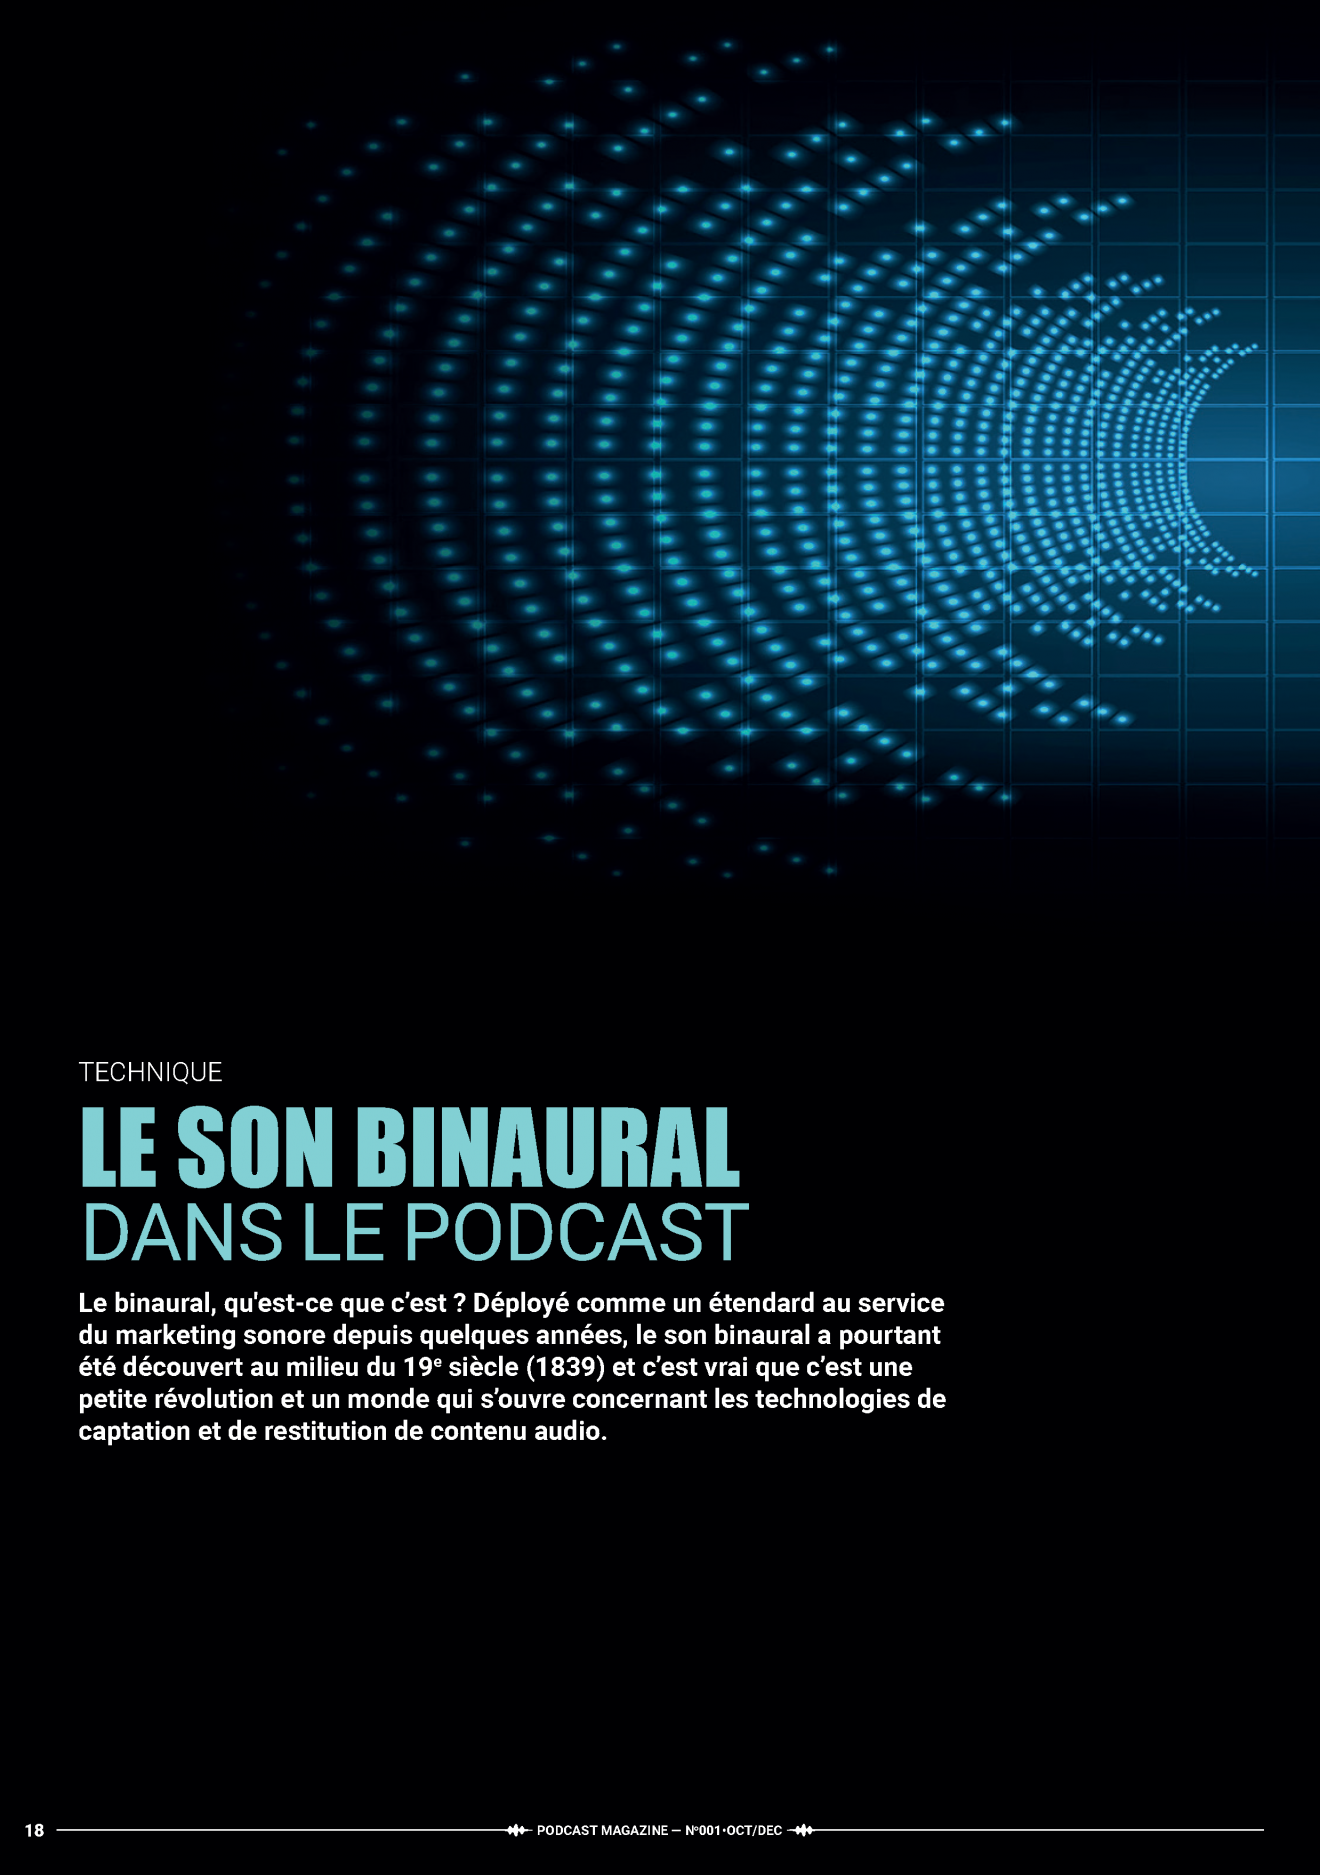 Le son binaural dans le podcast